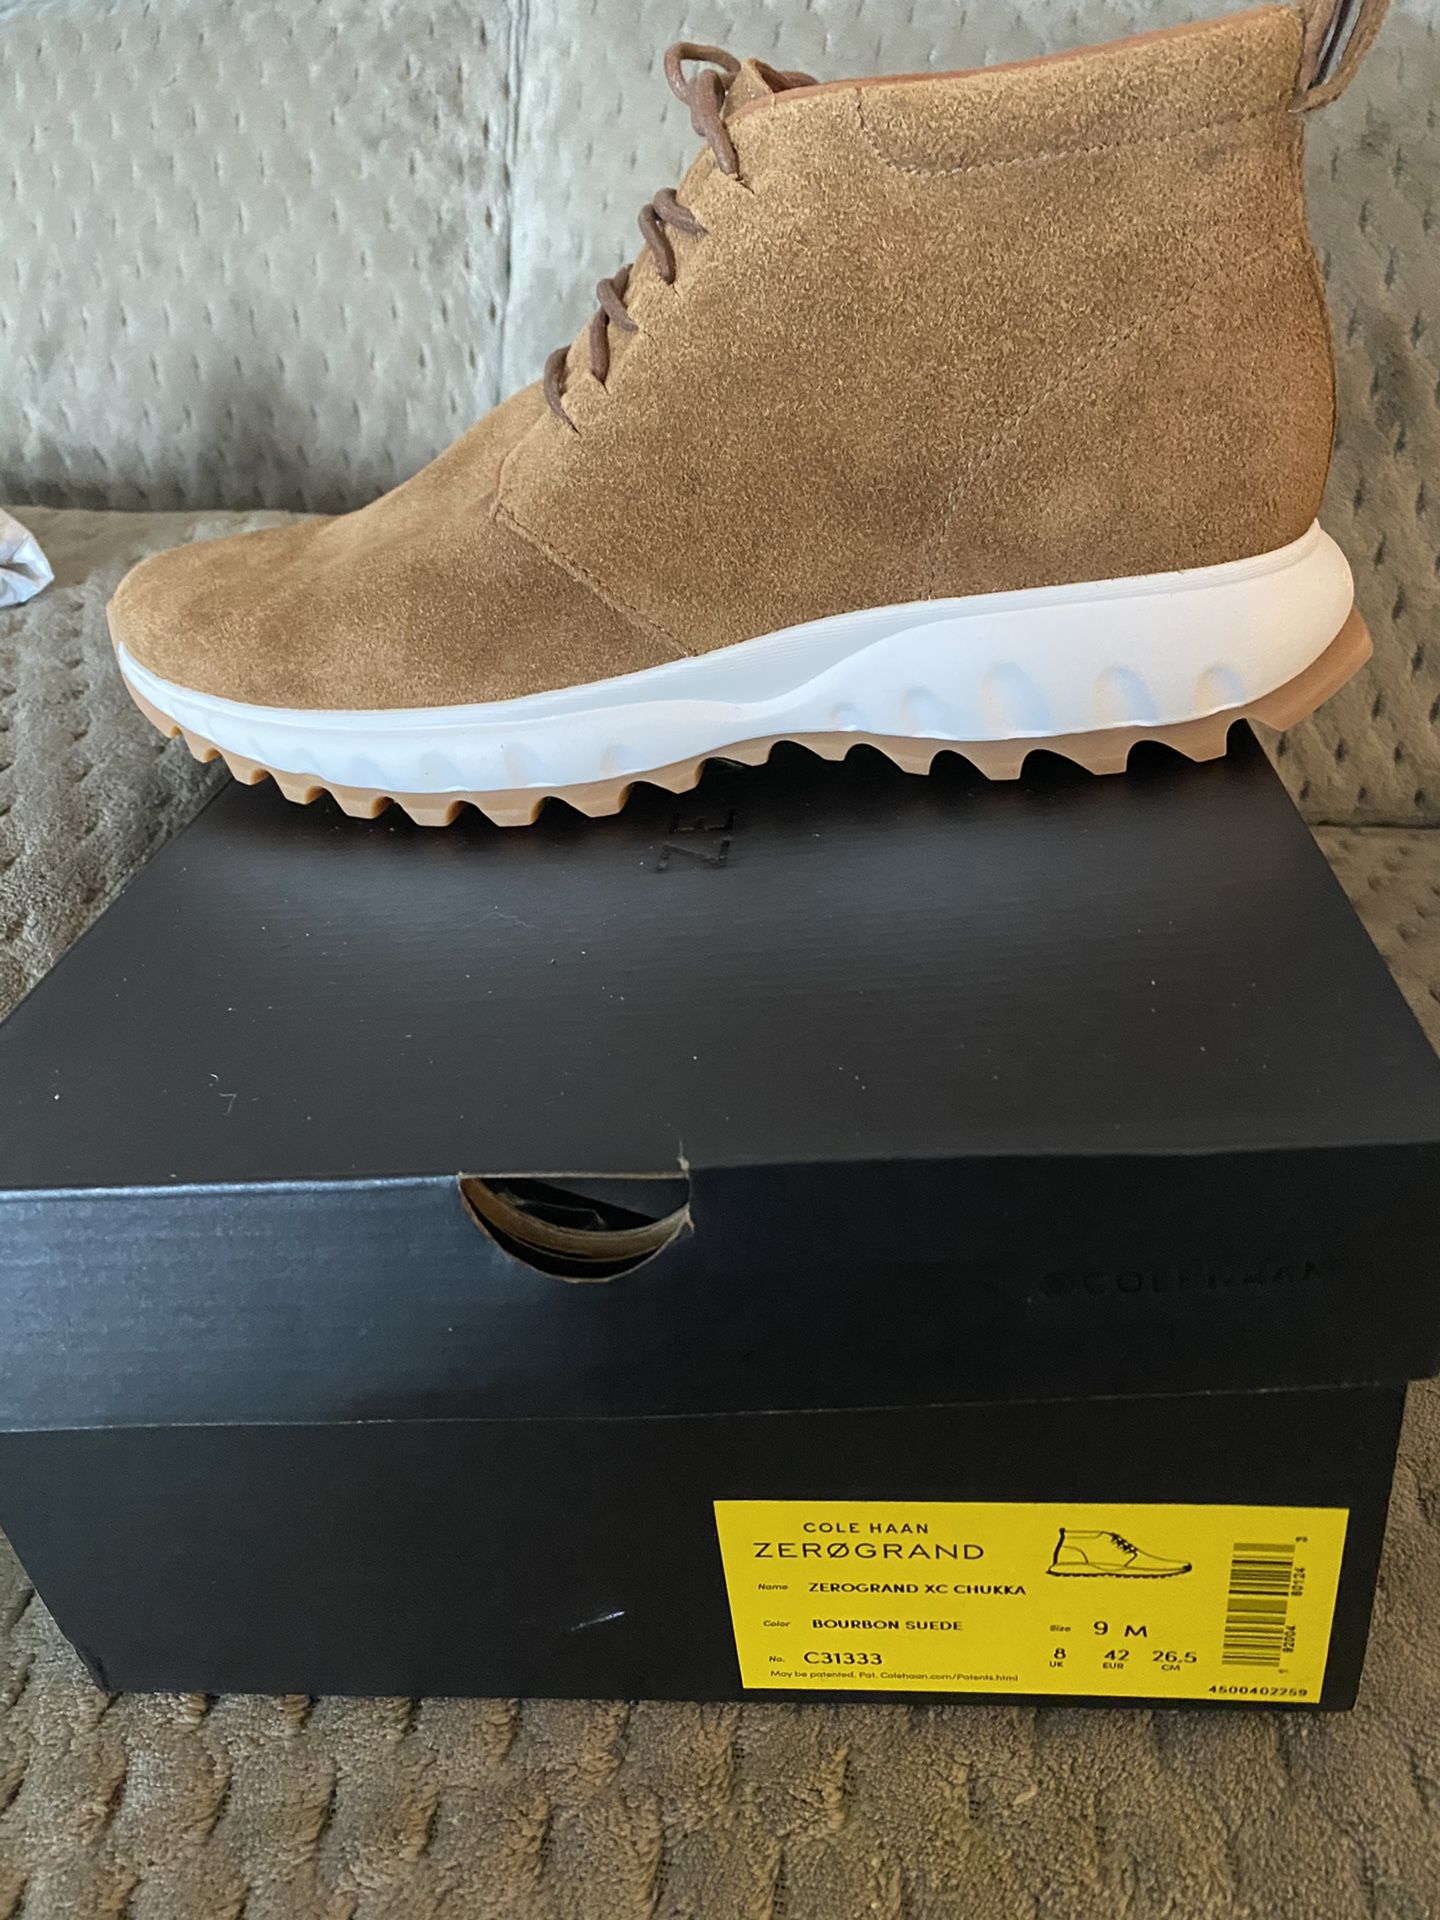 New in box Cole Haan men’s waterproof boots size 9 retail $200